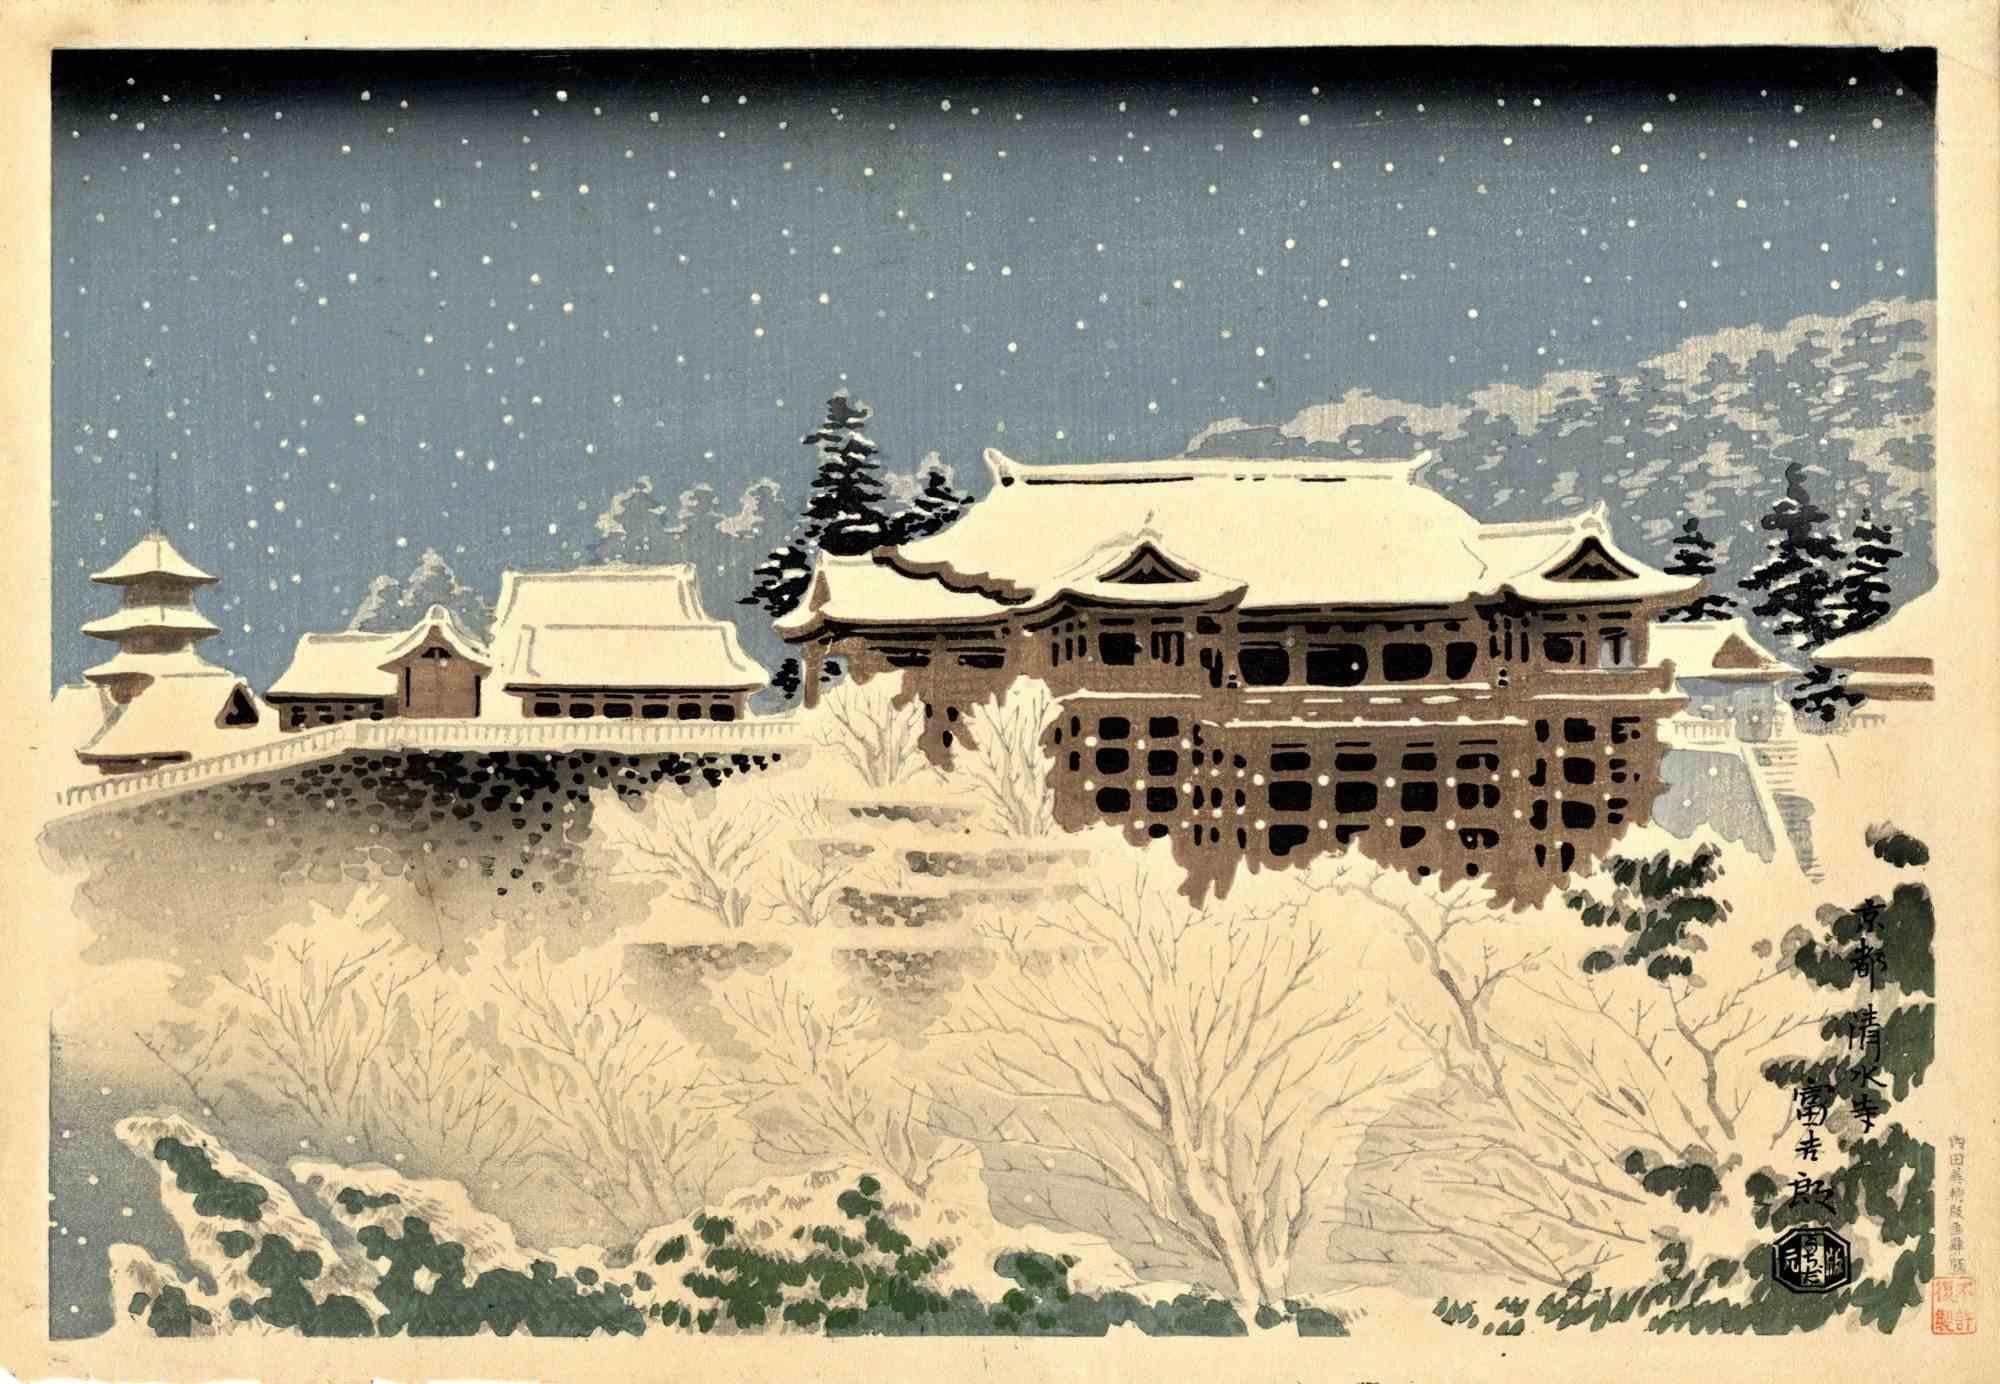 Kyomizu Temple in Kyoto - Woodcut by Tomikichiro Tokuriki - 1950s